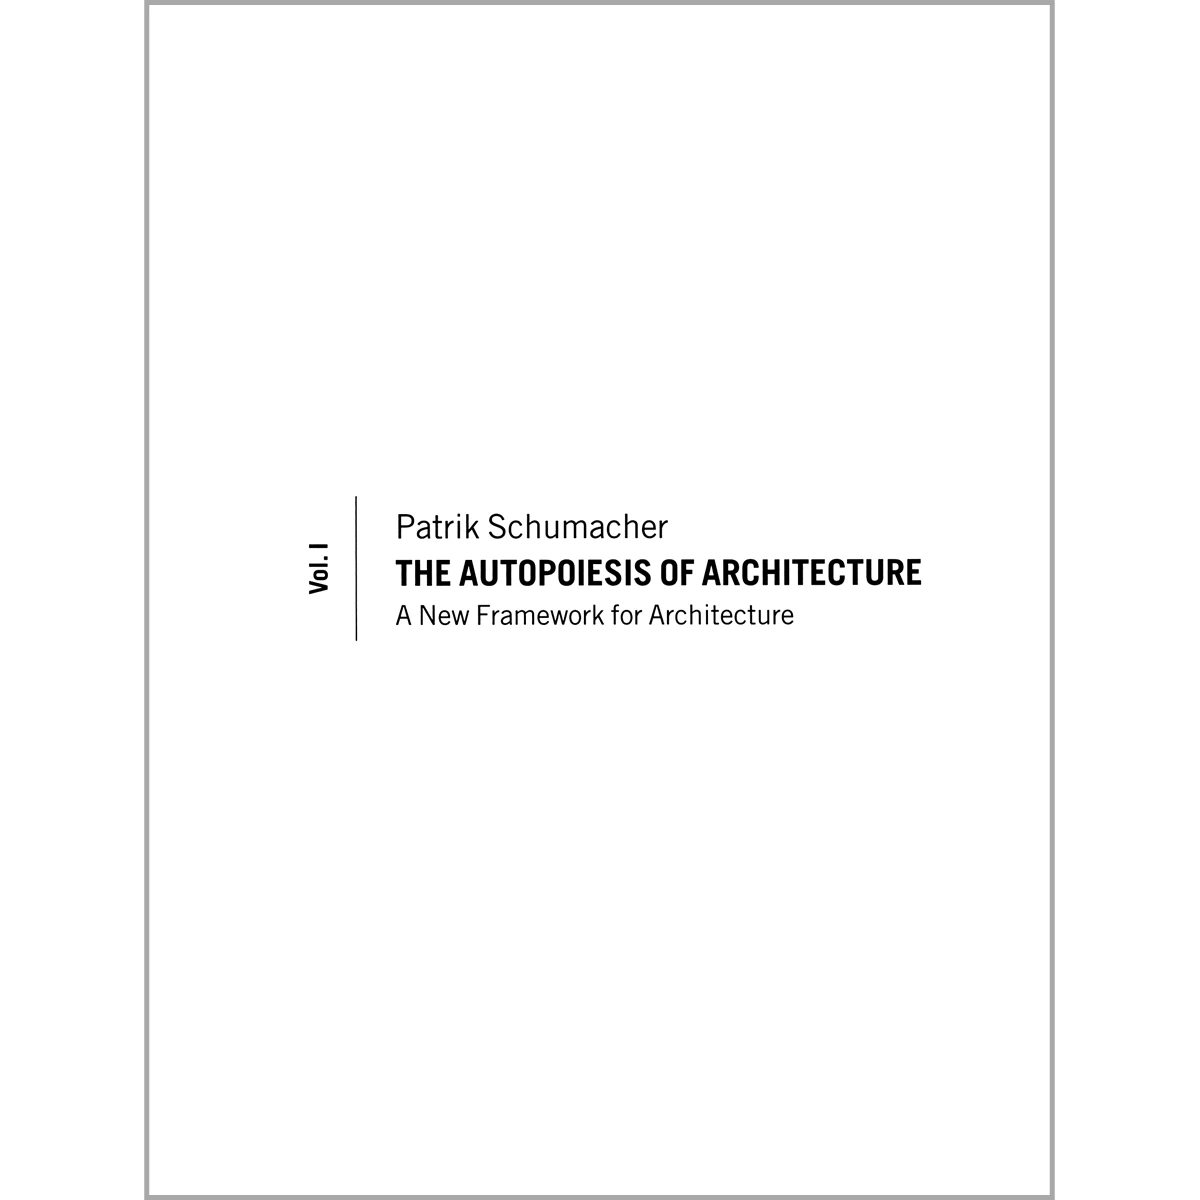 The Autopoiesis of Architecture